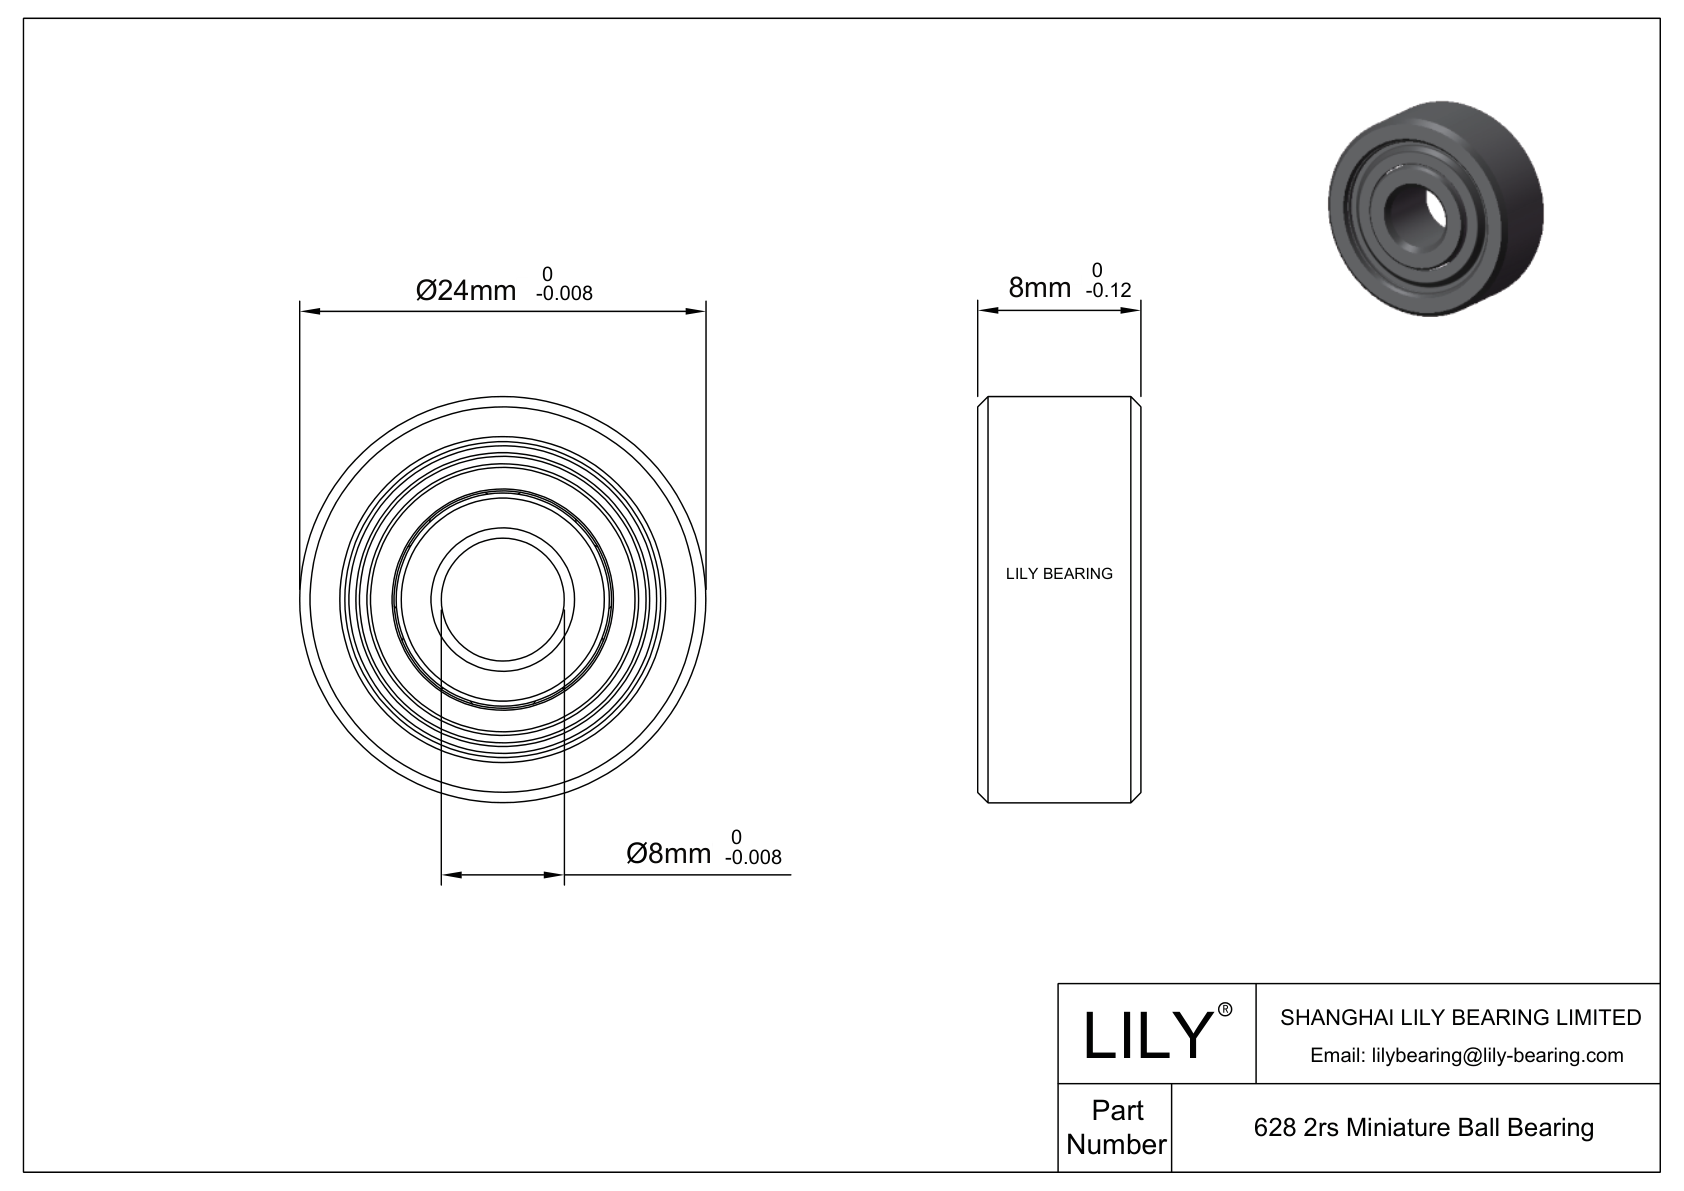 LILY-PU62845-8 Polyurethane Coated Bearing cad drawing